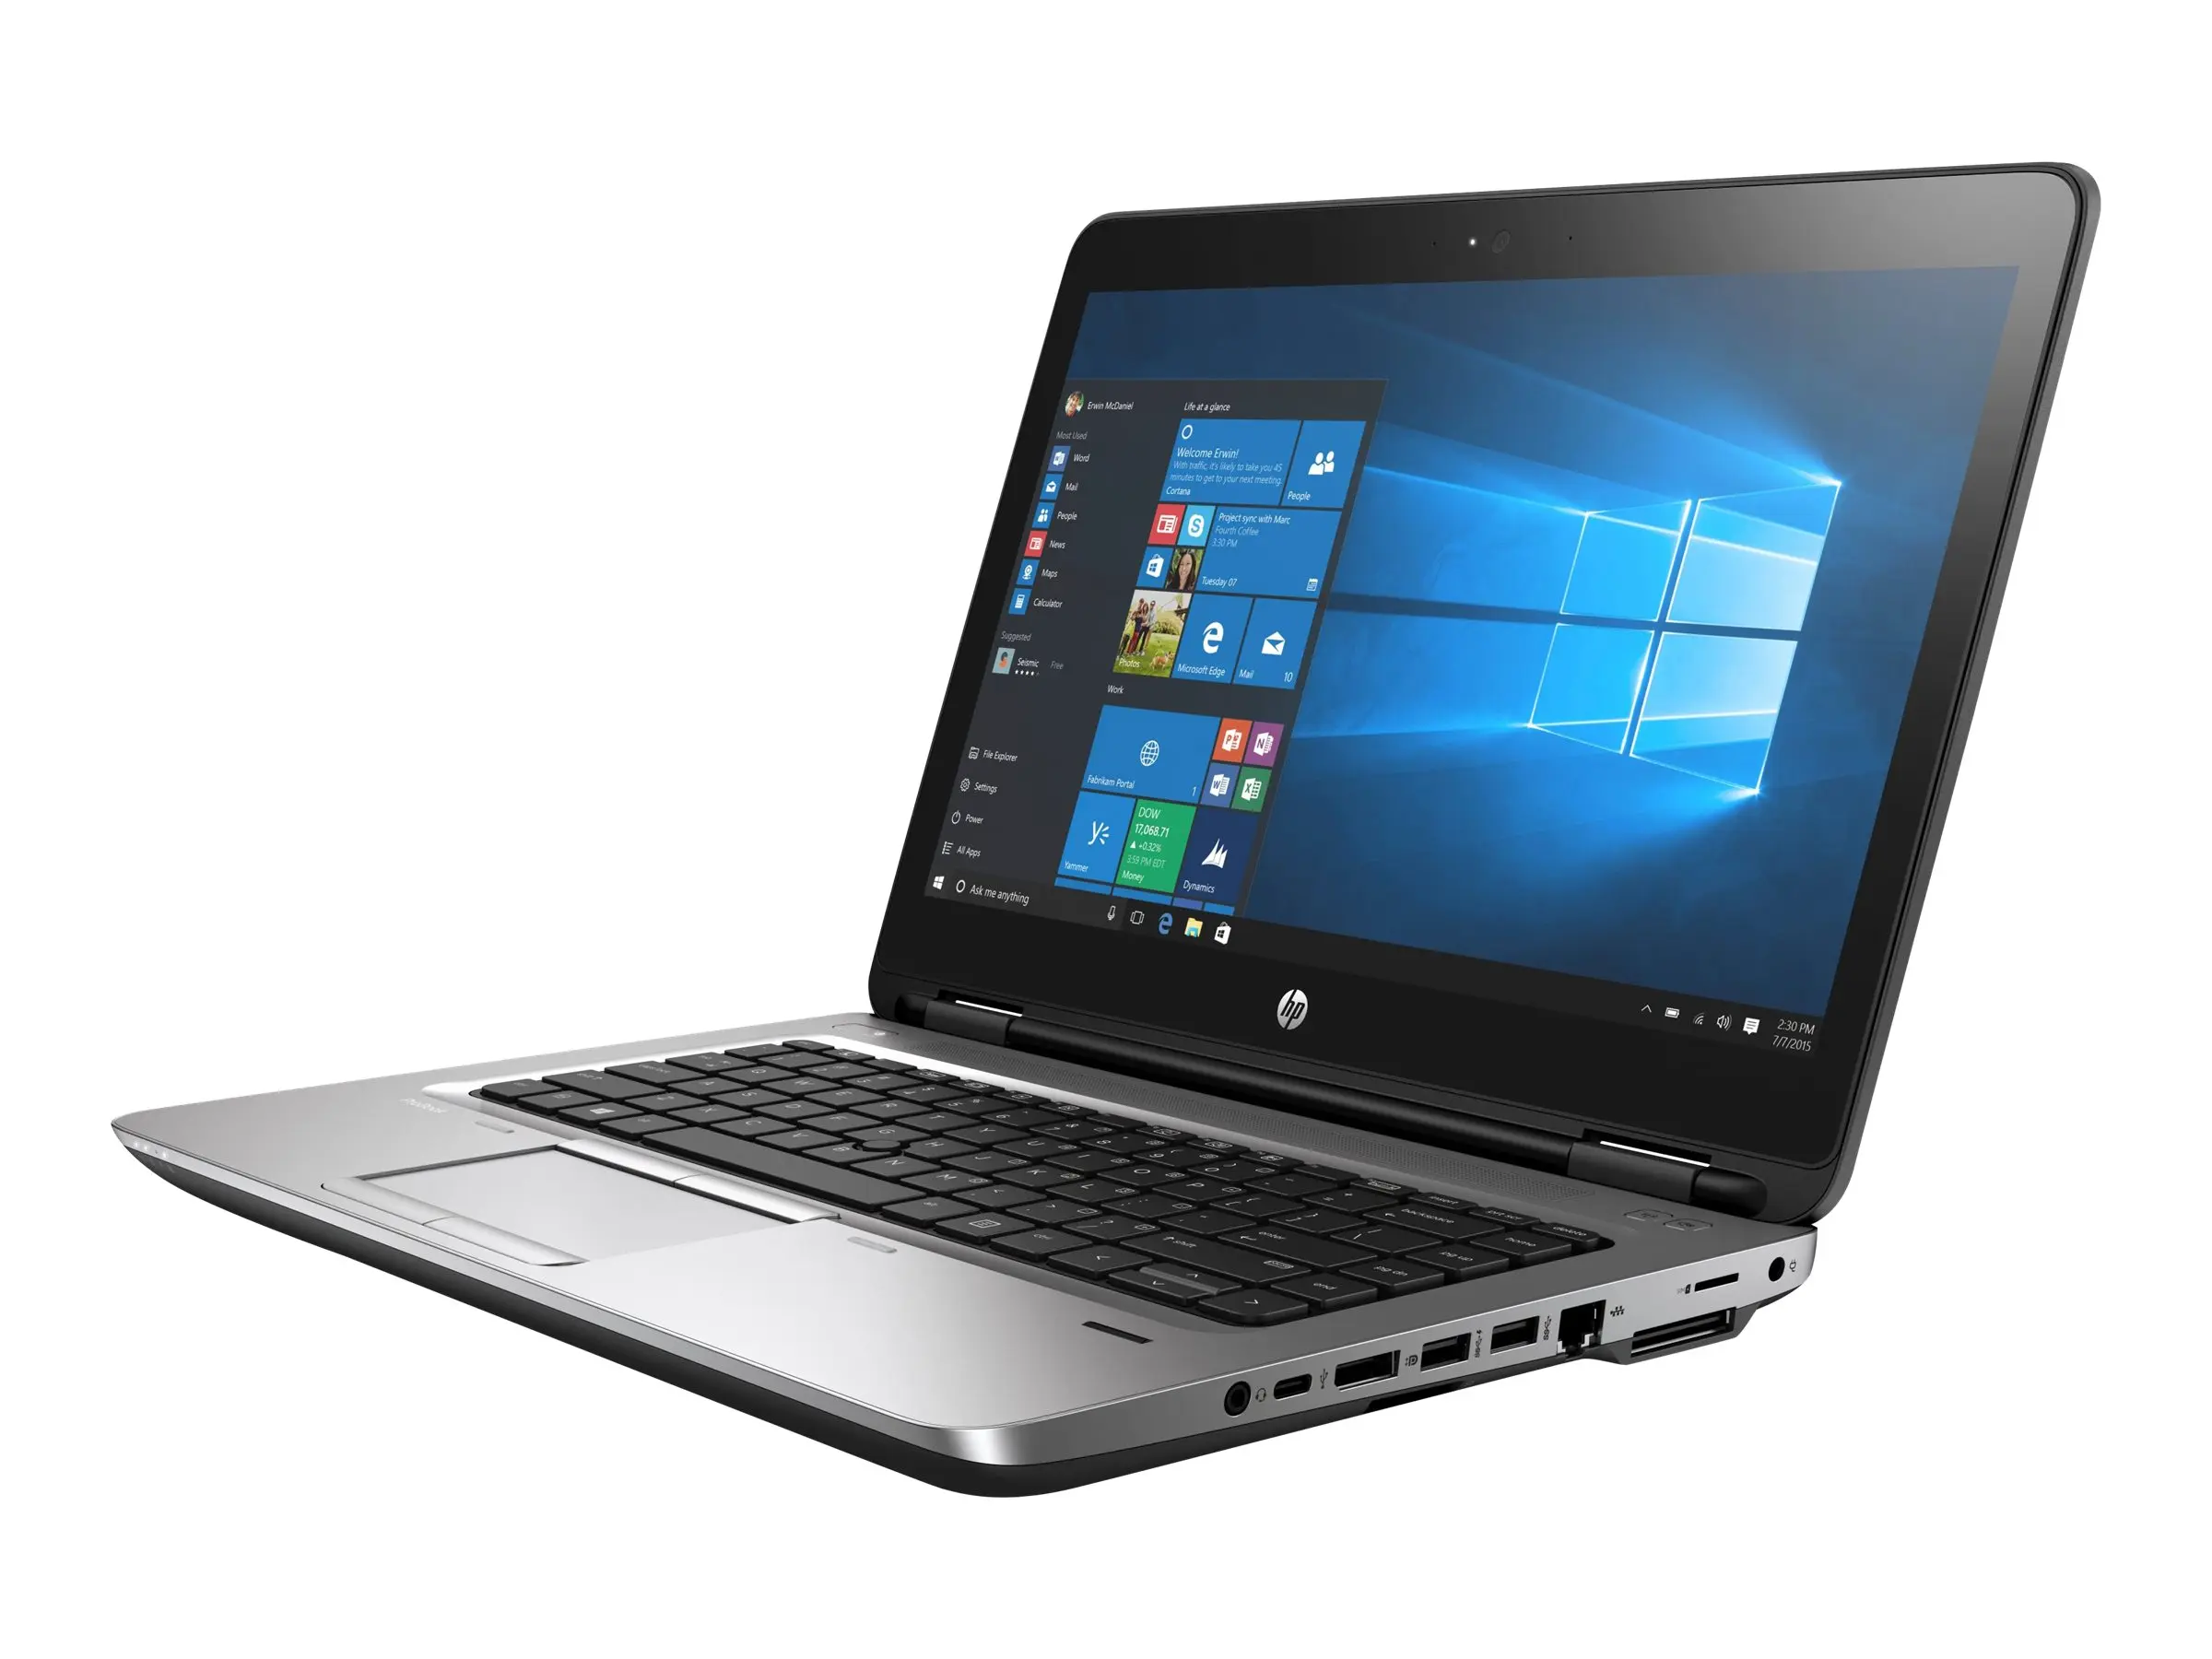 hewlett packard probook 640 - Which generation is HP ProBook 640